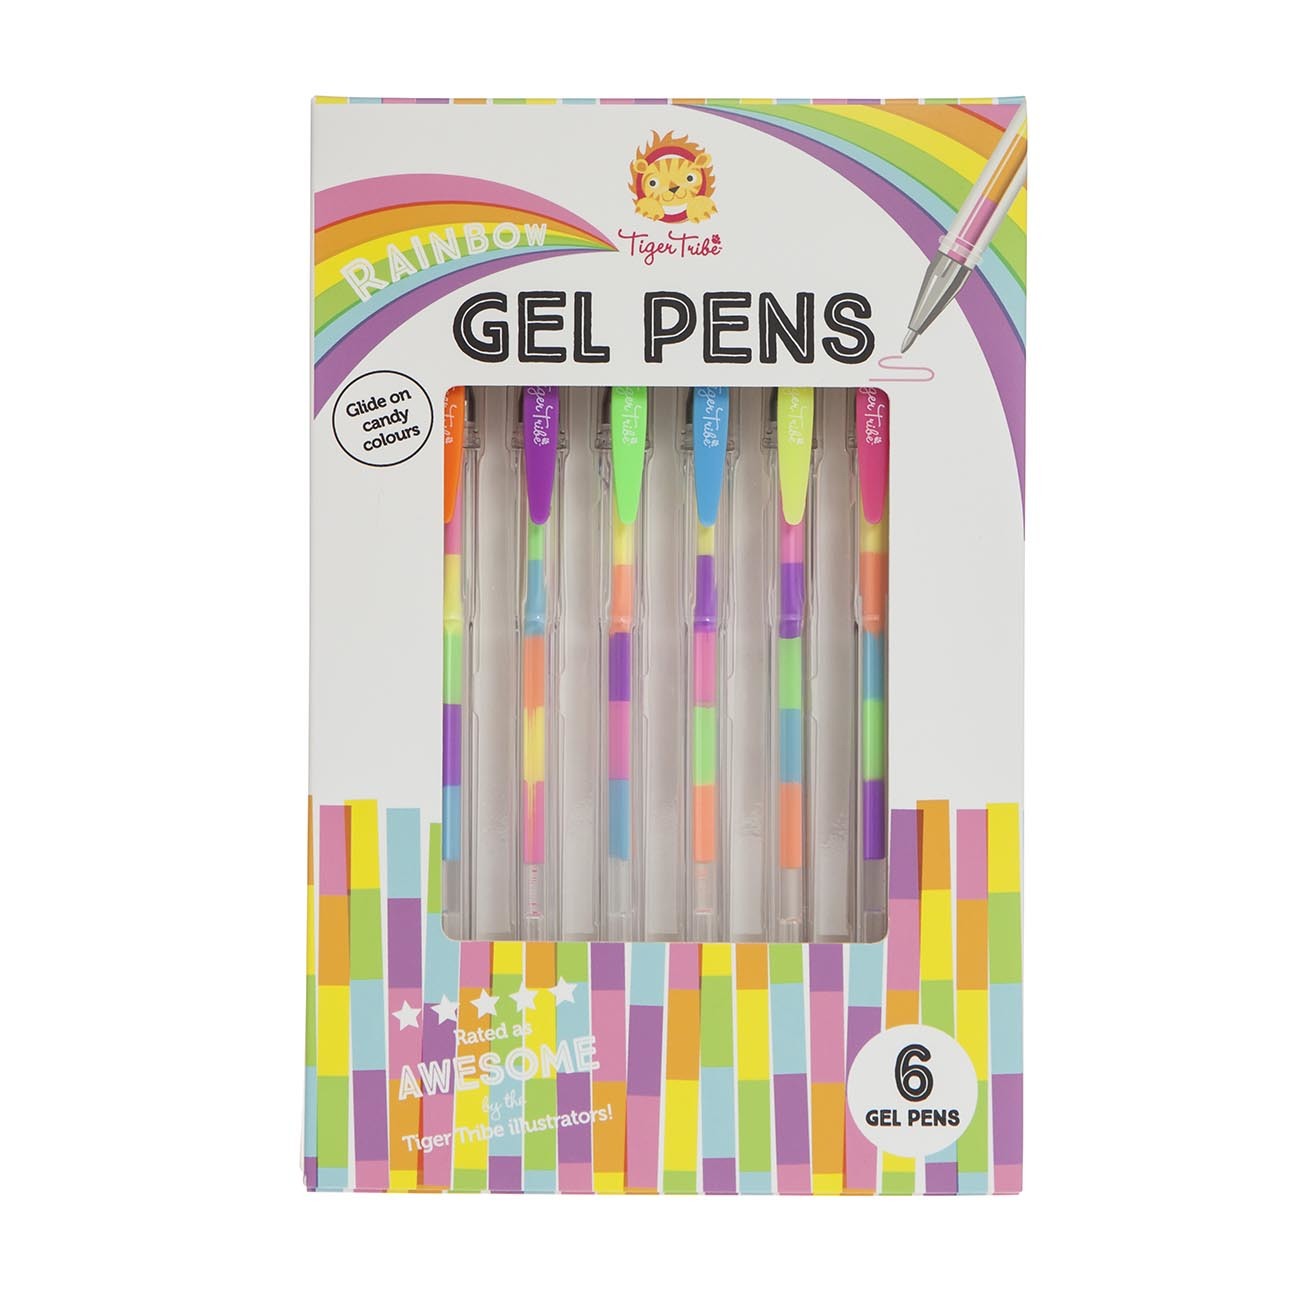 Tiger Tribe Rainbow Gel Pens